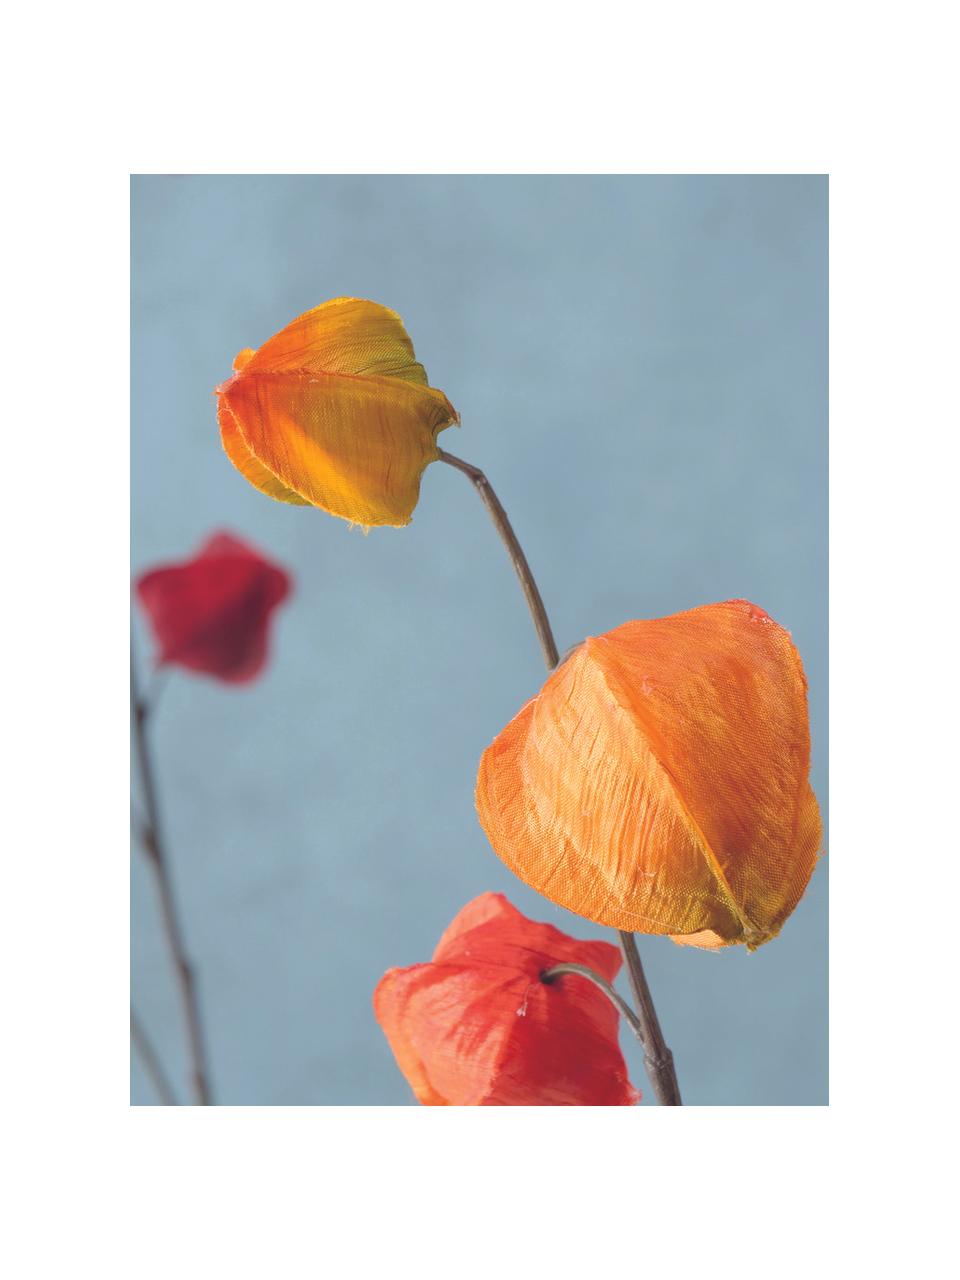 Set 2 fiori artificiali Physalis, Plastica, Arancione, lilla, Alt. 90 cm